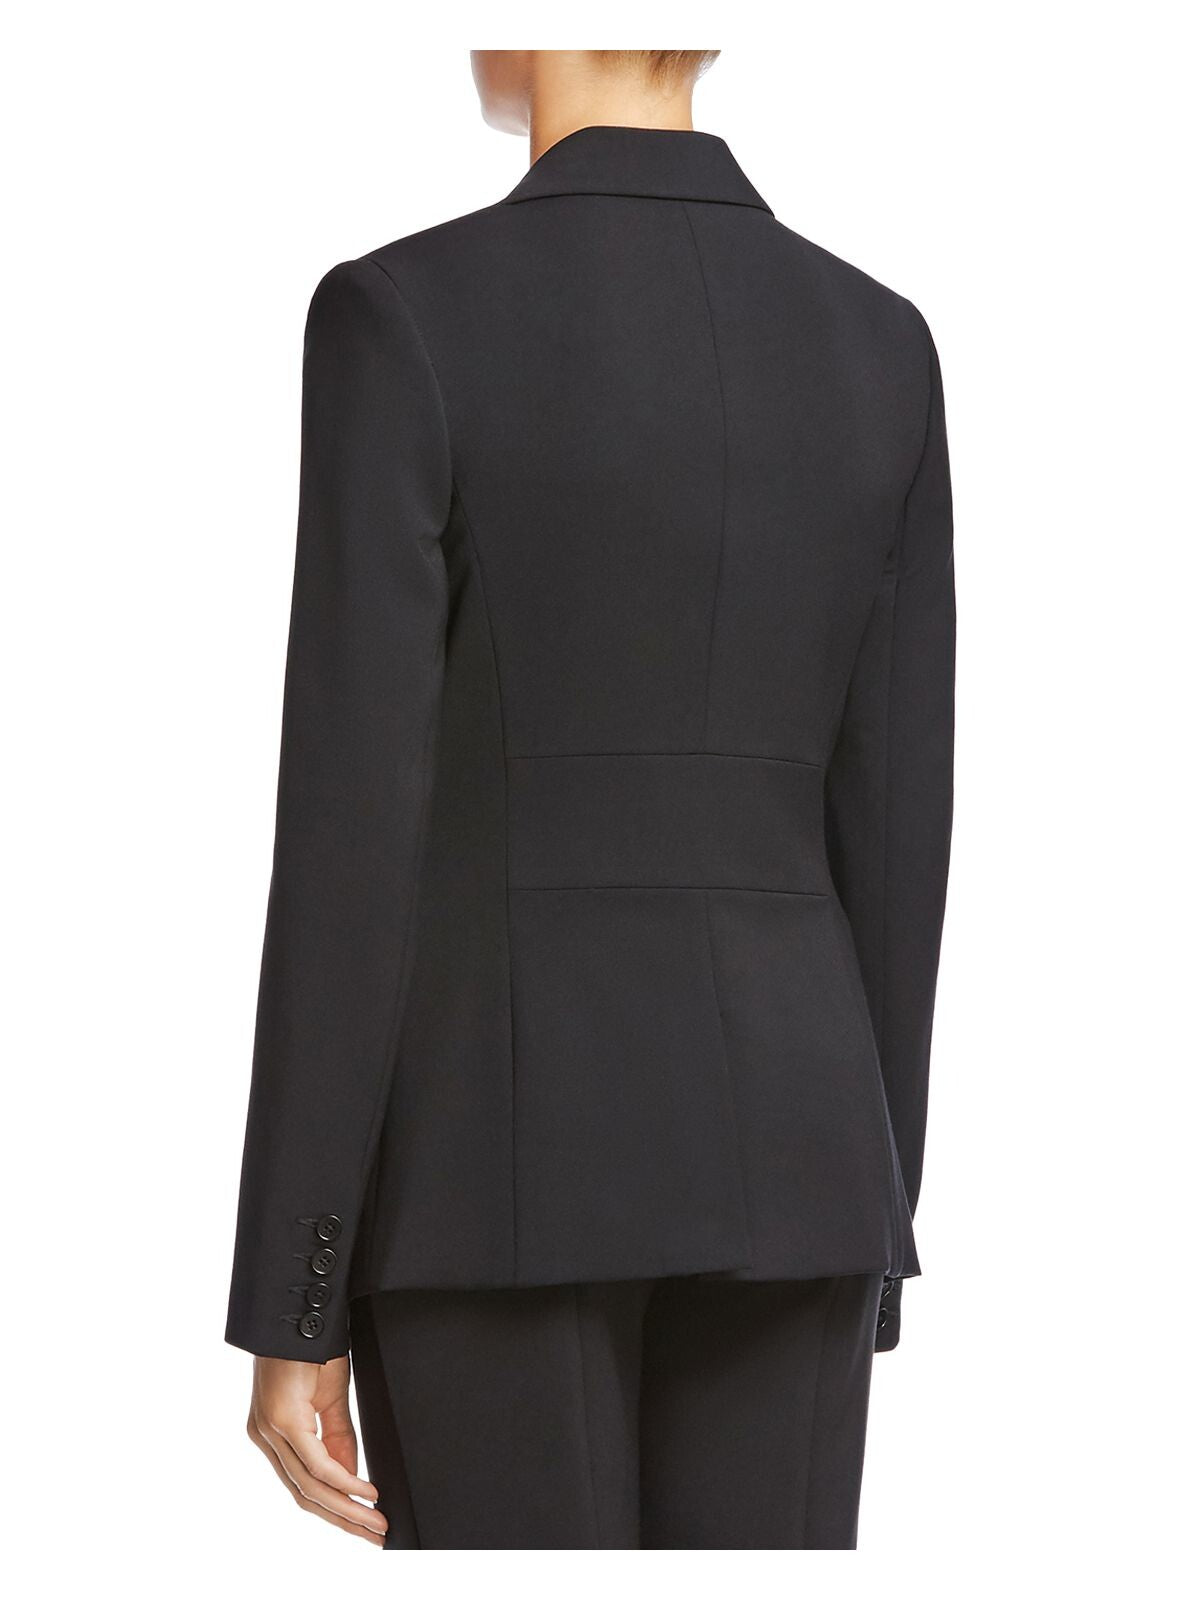 BAILEY44 Womens Black Suit Cocktail Jacket Size: 6